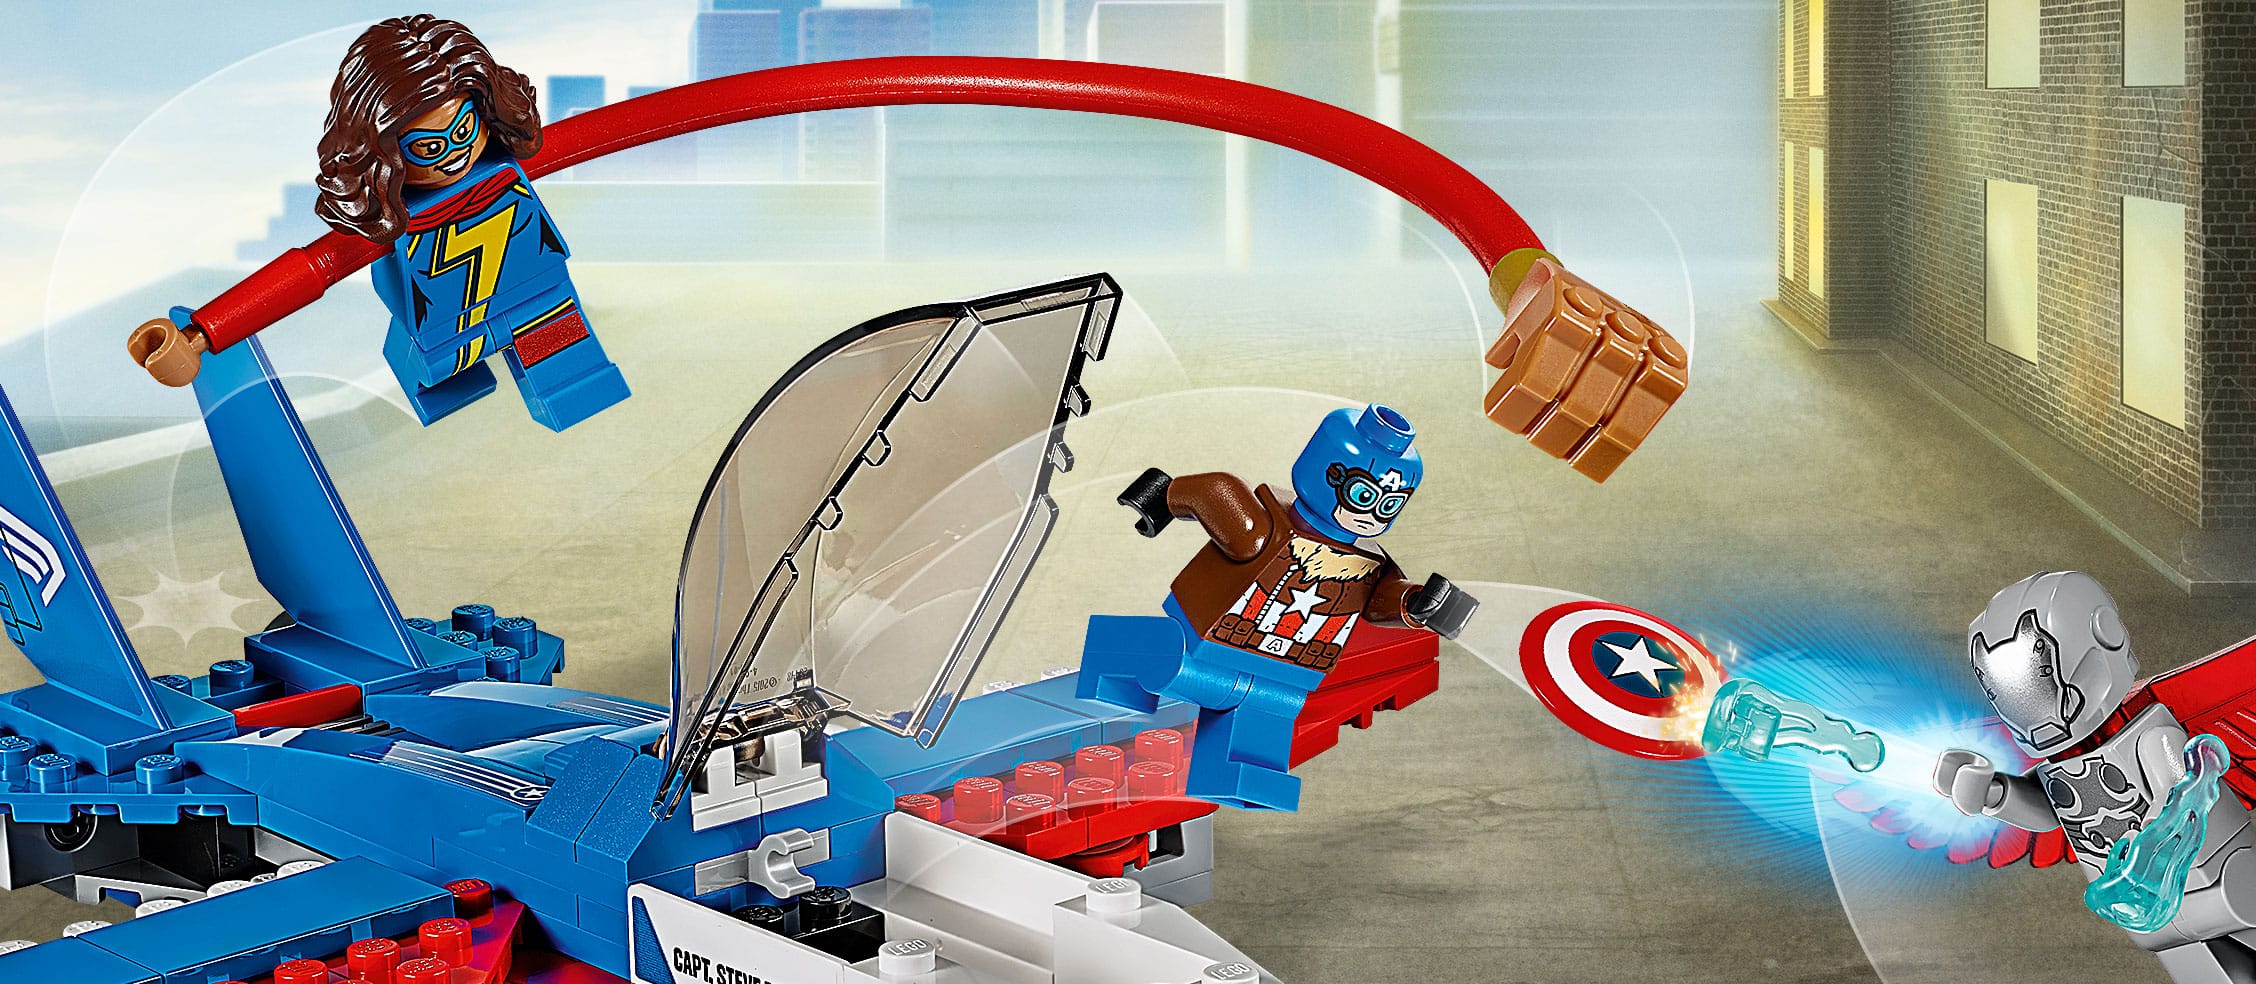 LEGO Marvel Super Heroes Backgrounds on Wallpapers Vista